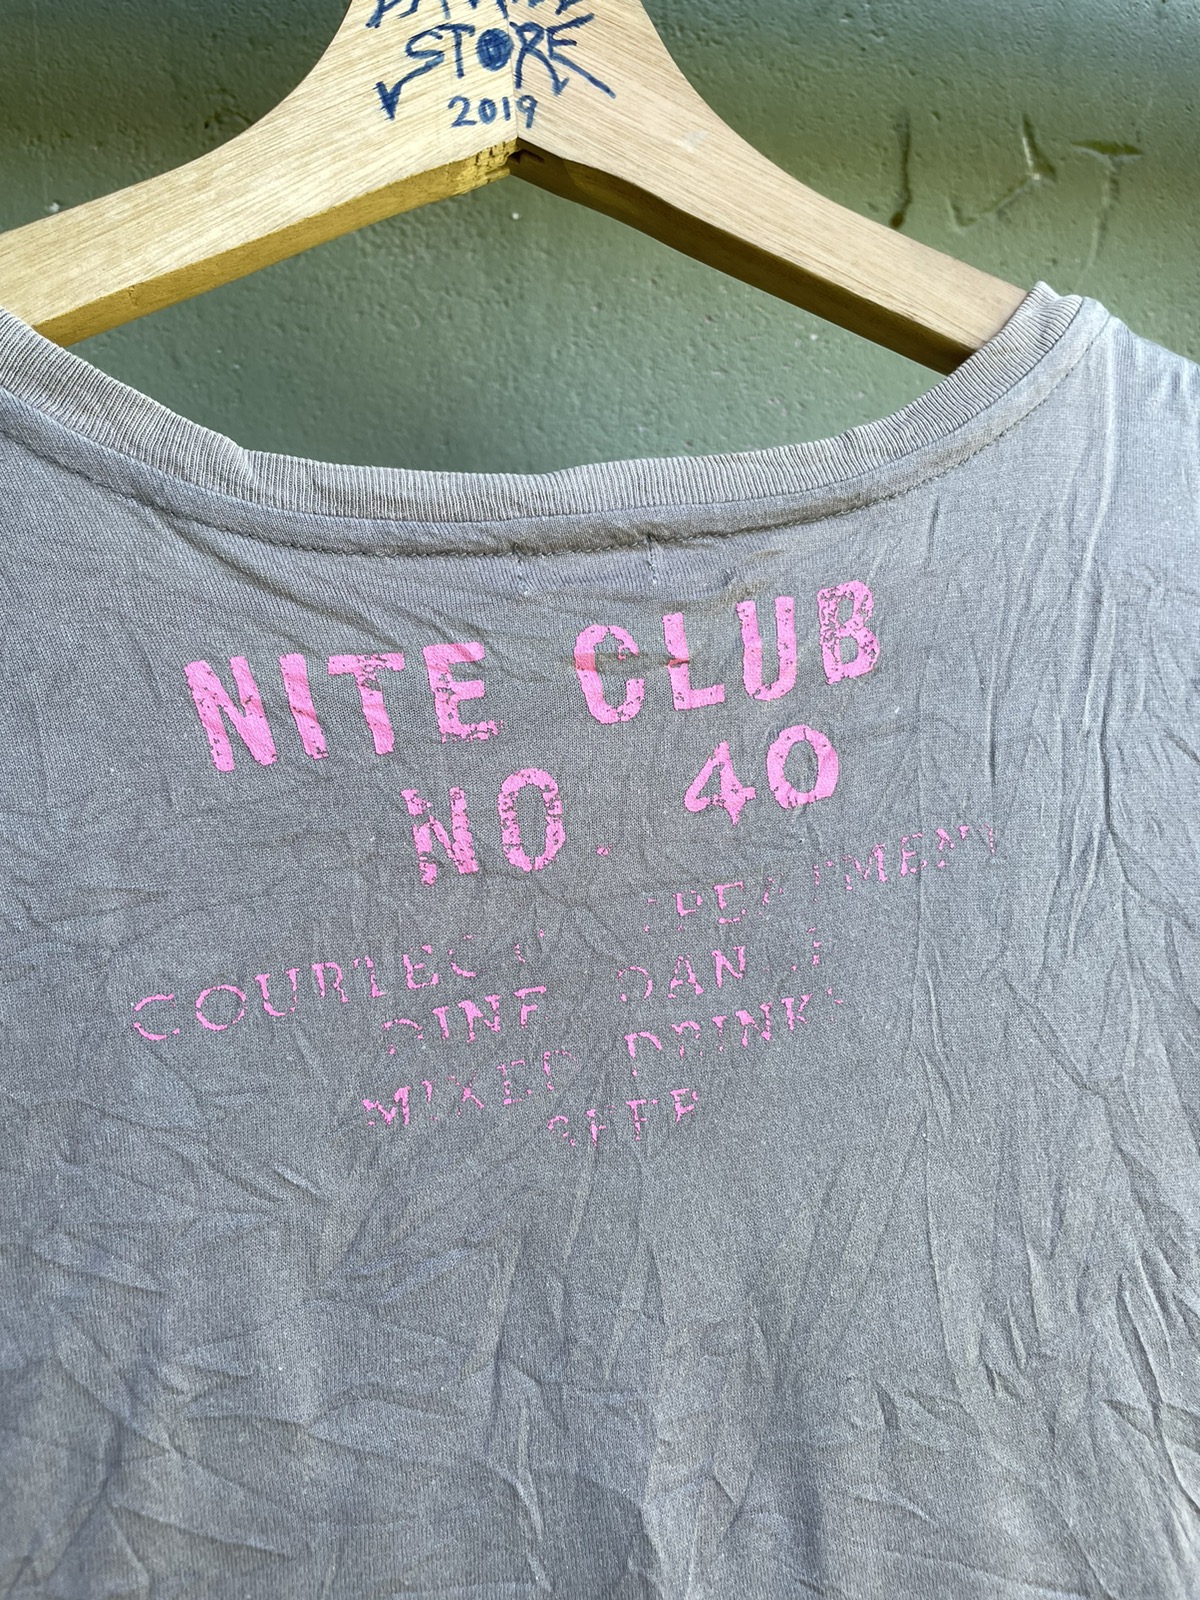 Paul Smith Nite Club Naked Girls Tees Japan - 8